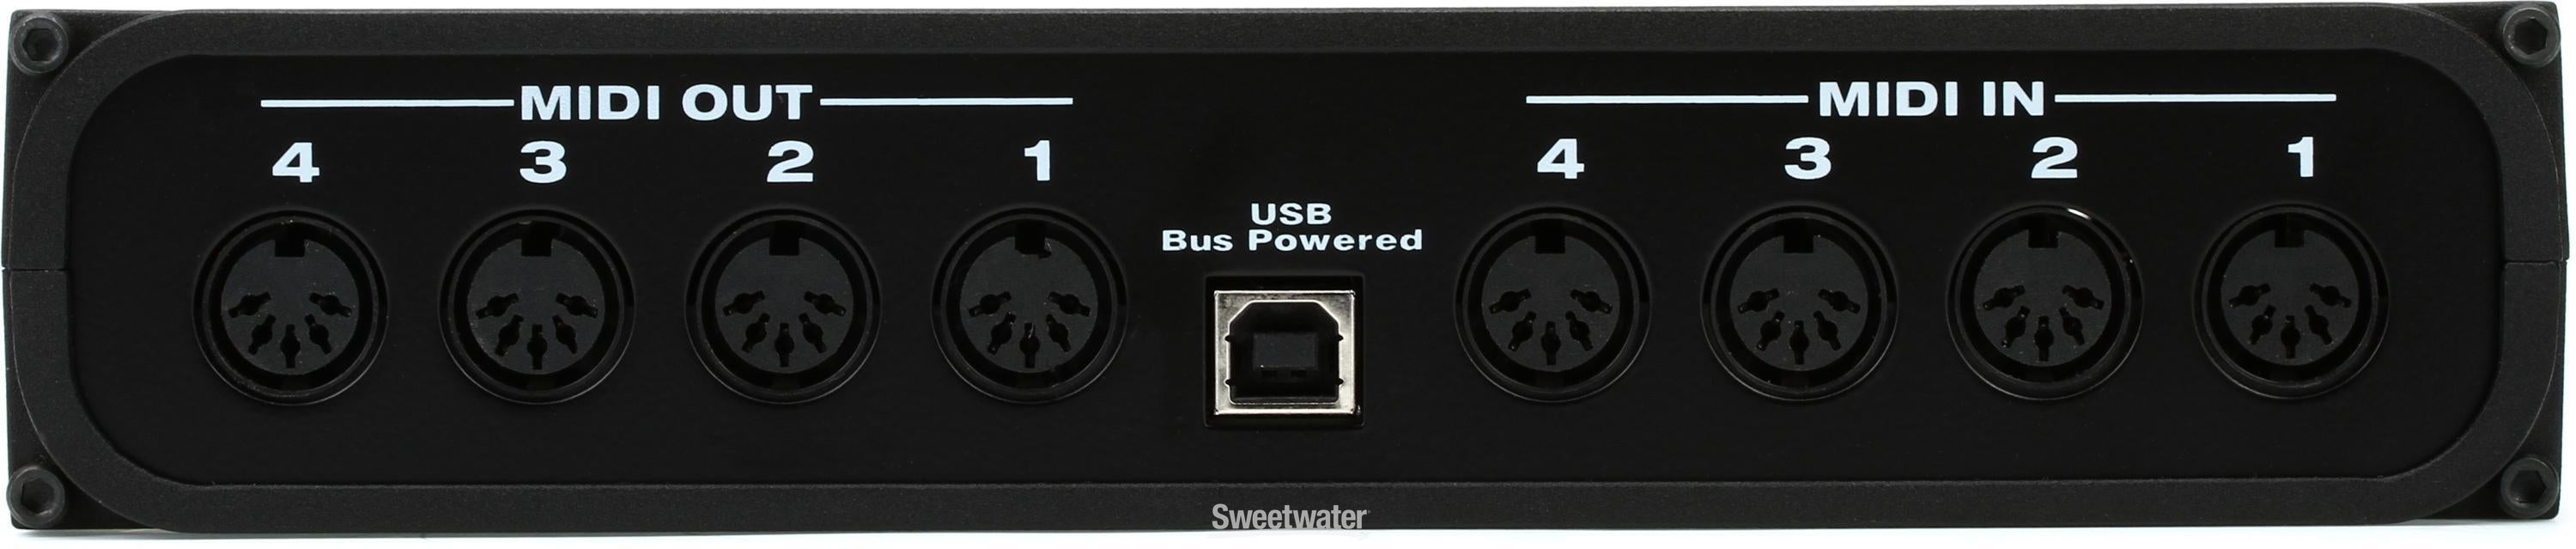 MOTU micro lite 5x5 USB MIDI Interface Reviews | Sweetwater